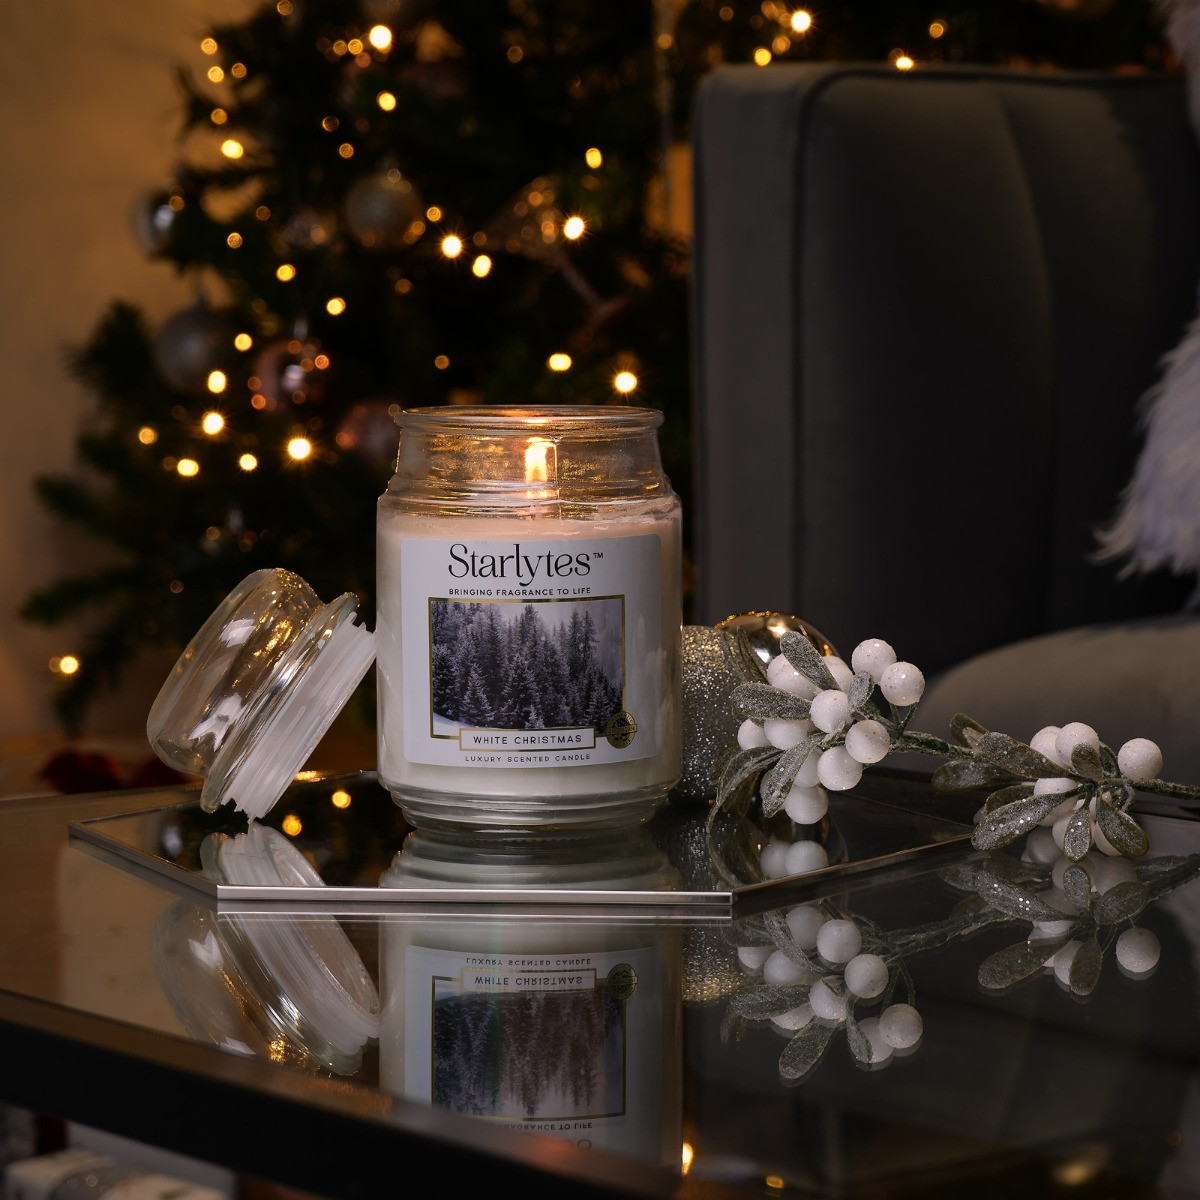 Starlytes 18oz Jar Candle - White Christmas >